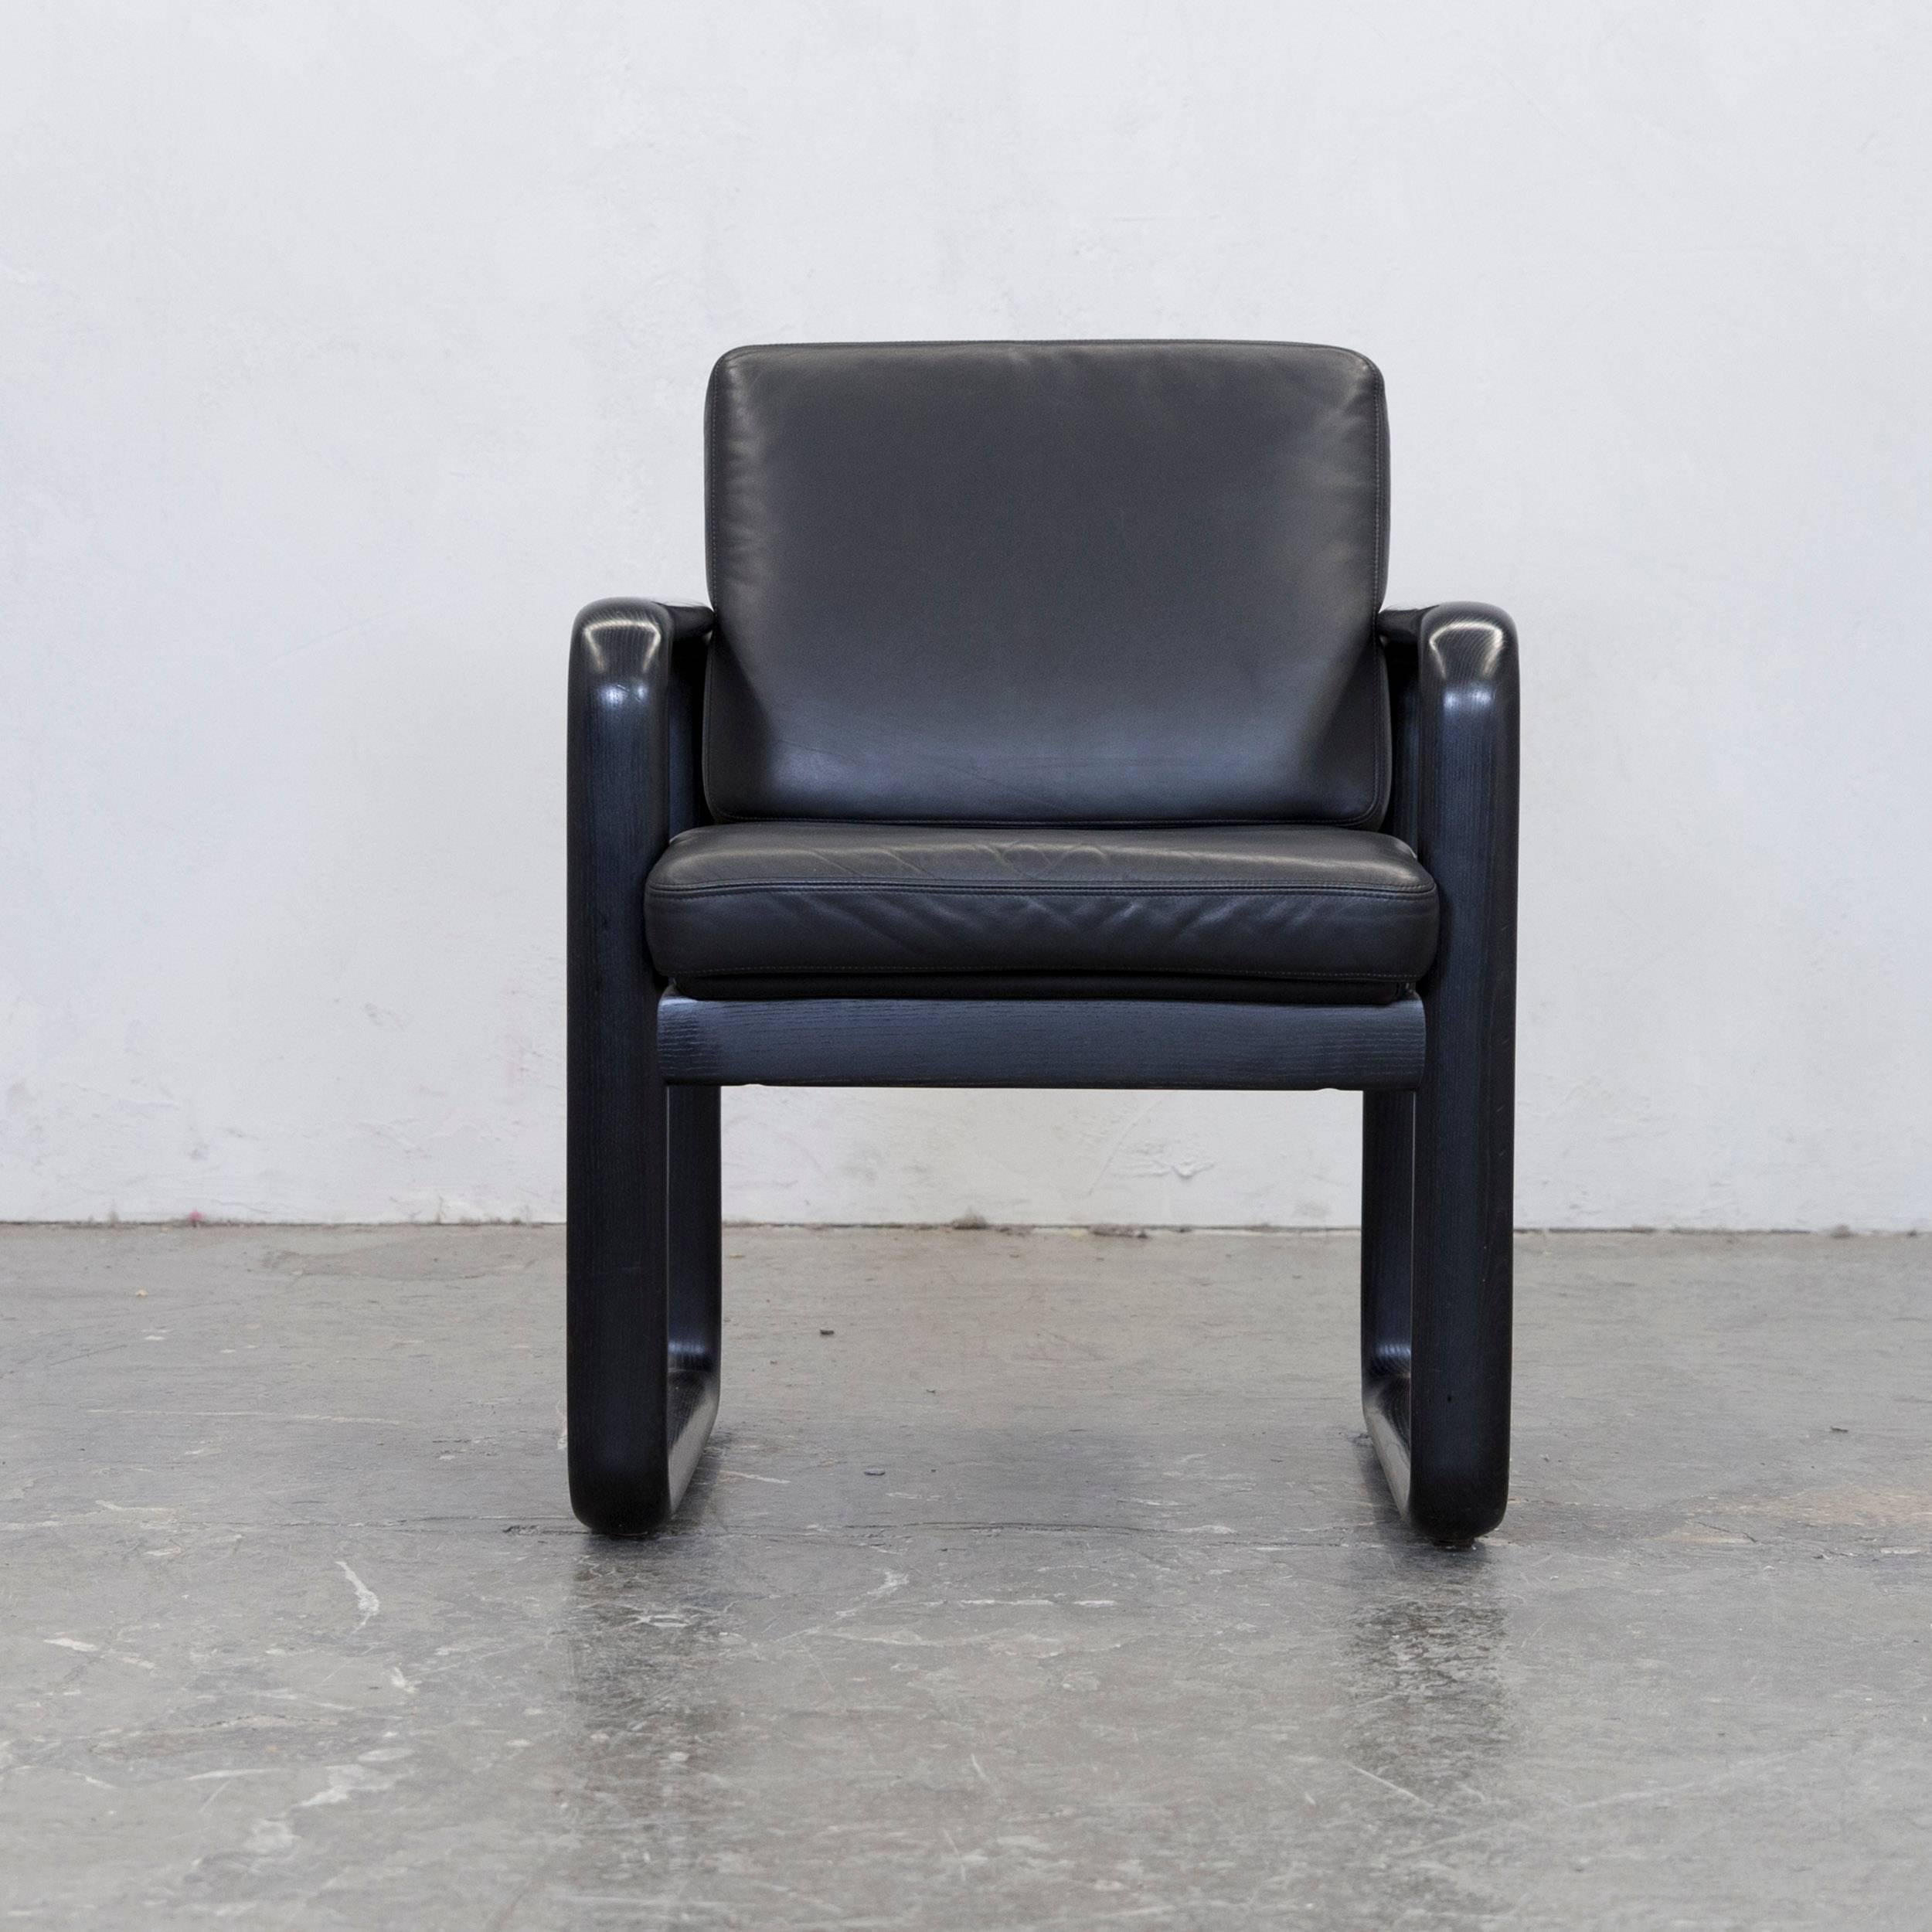 Black colored original Rosenthal Studio line designer leather chair in a vintage design, made for pure comfort.